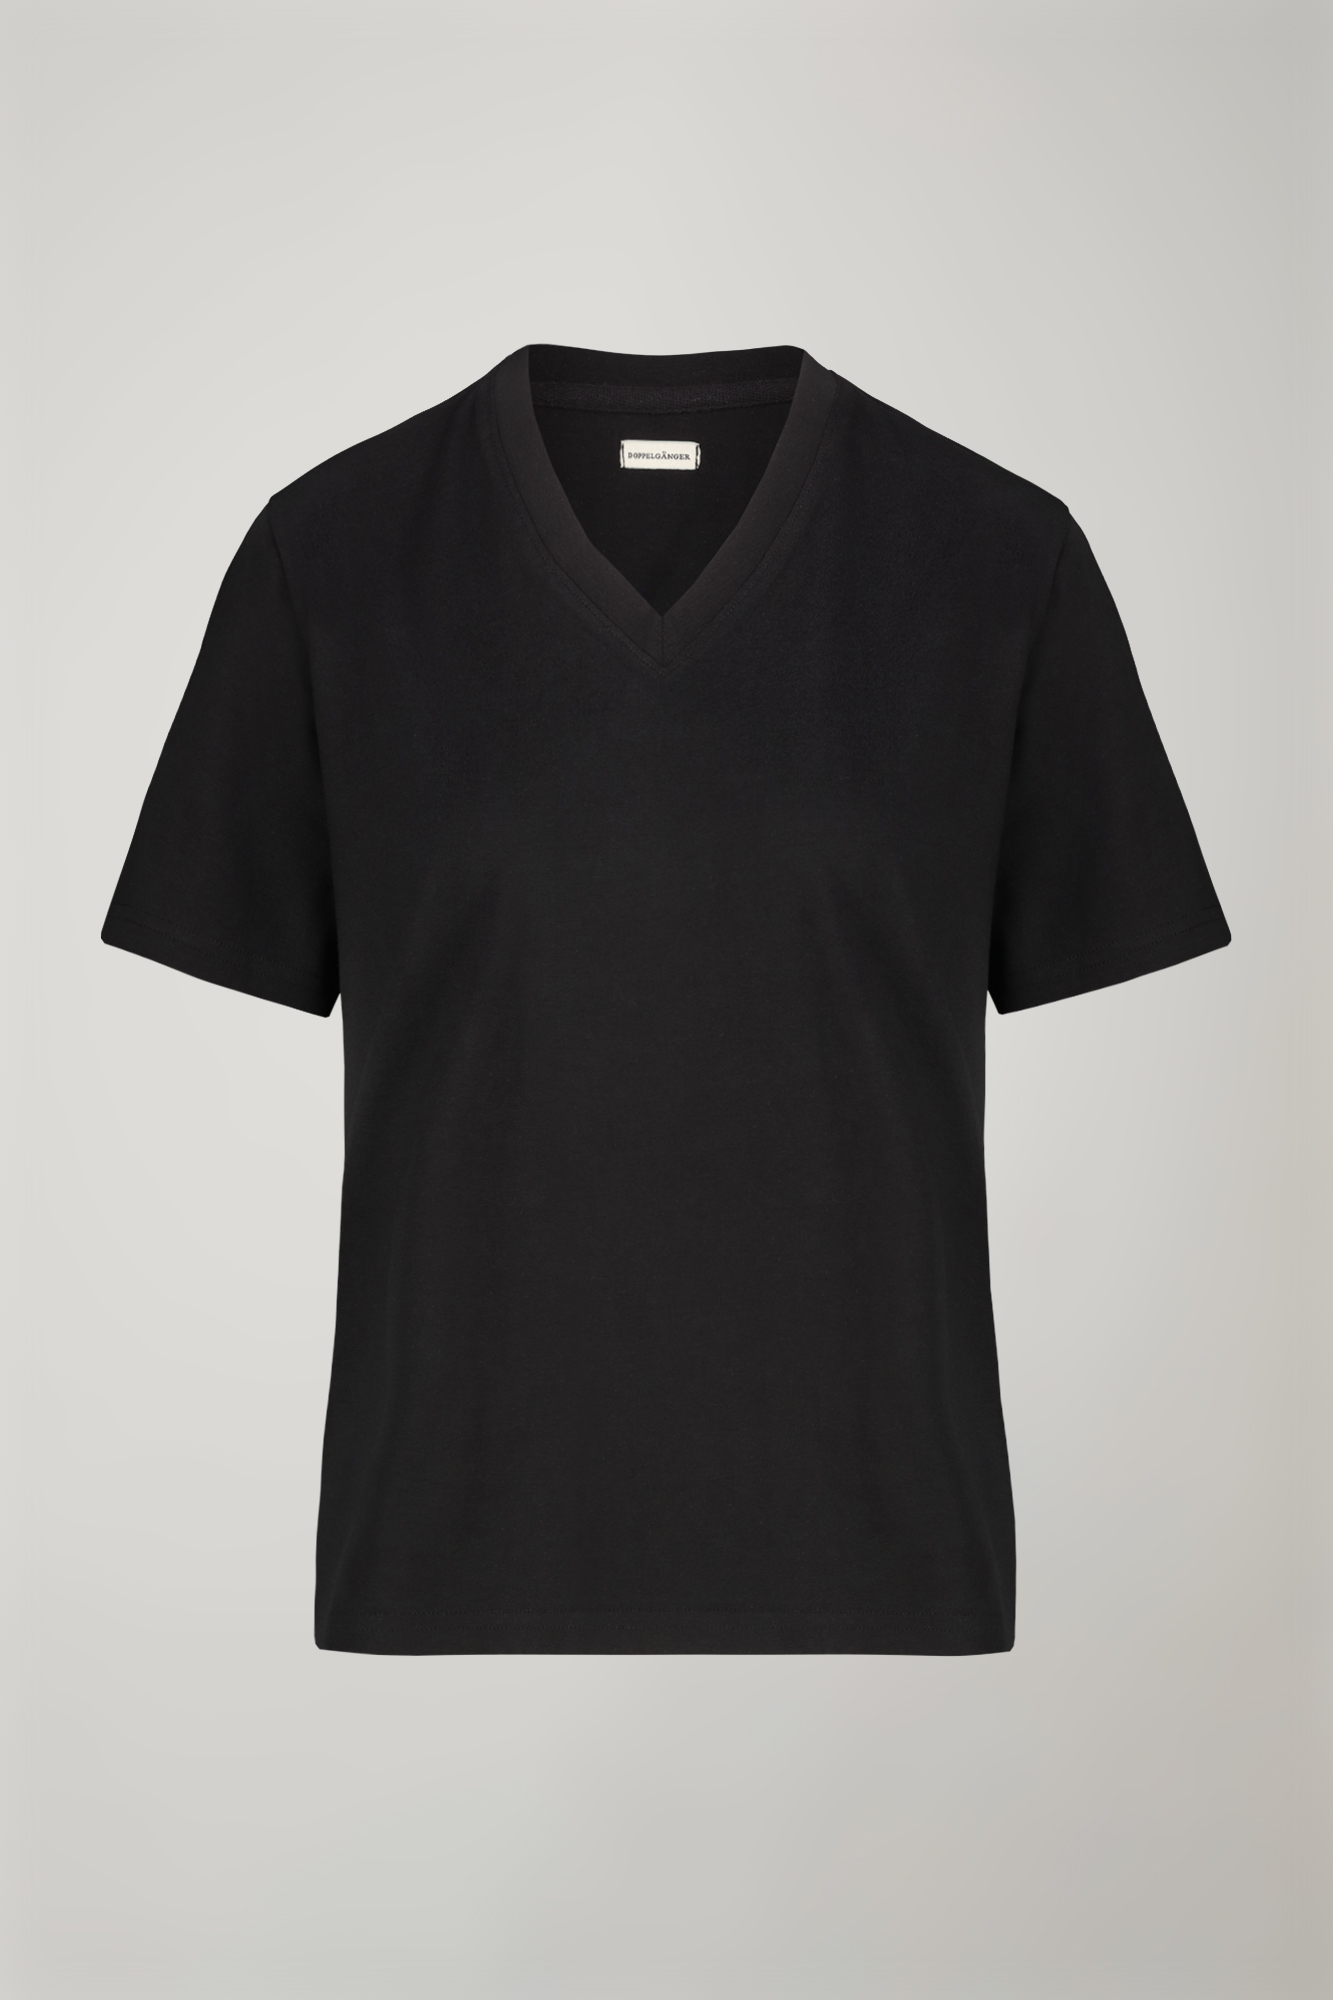 Women’s v-neck t-shirt 100% cotton regular fit image number null